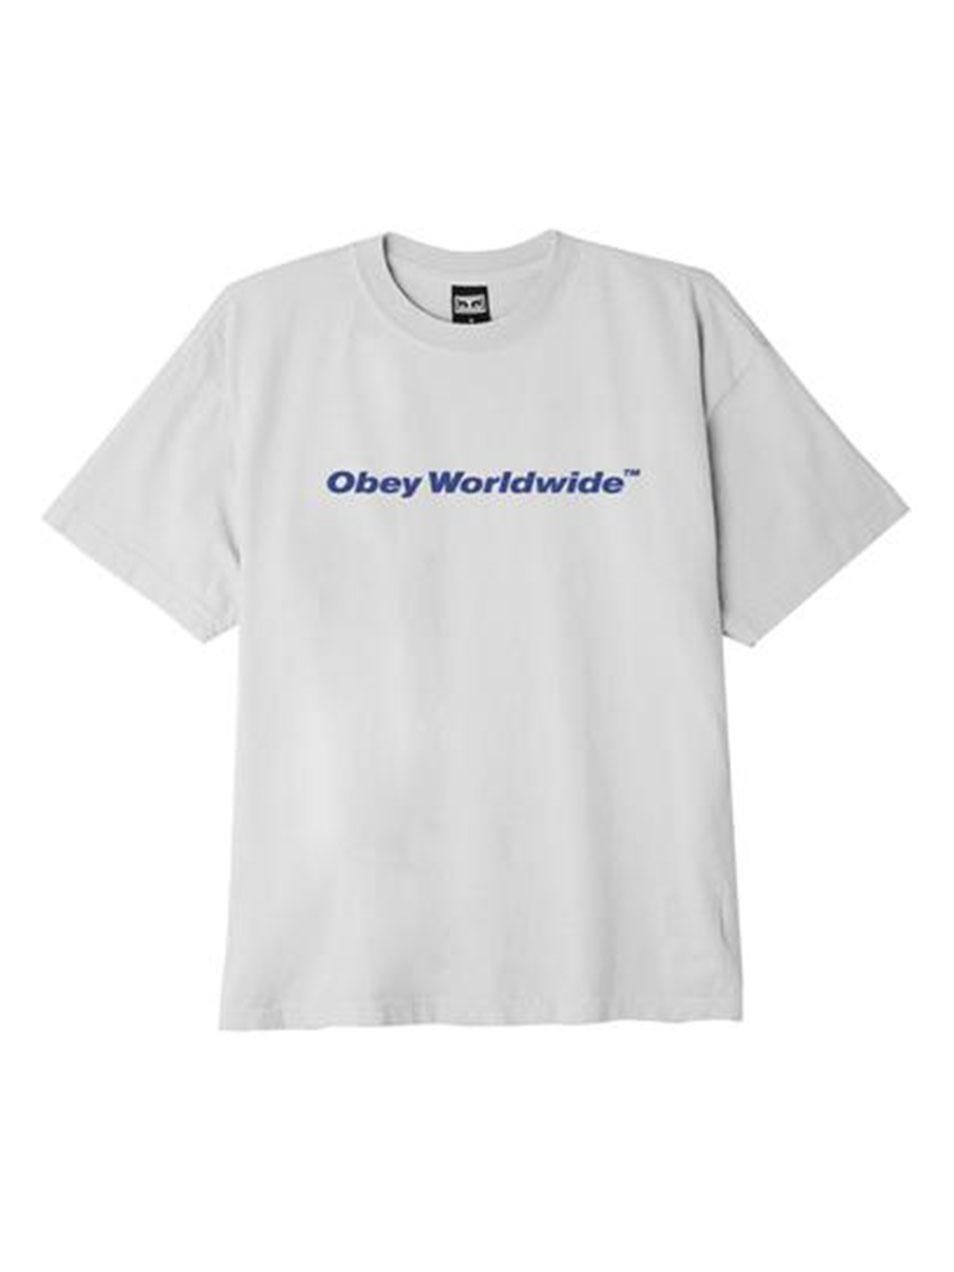 Obey Worldwide Classic T-Shirt White 165262370.